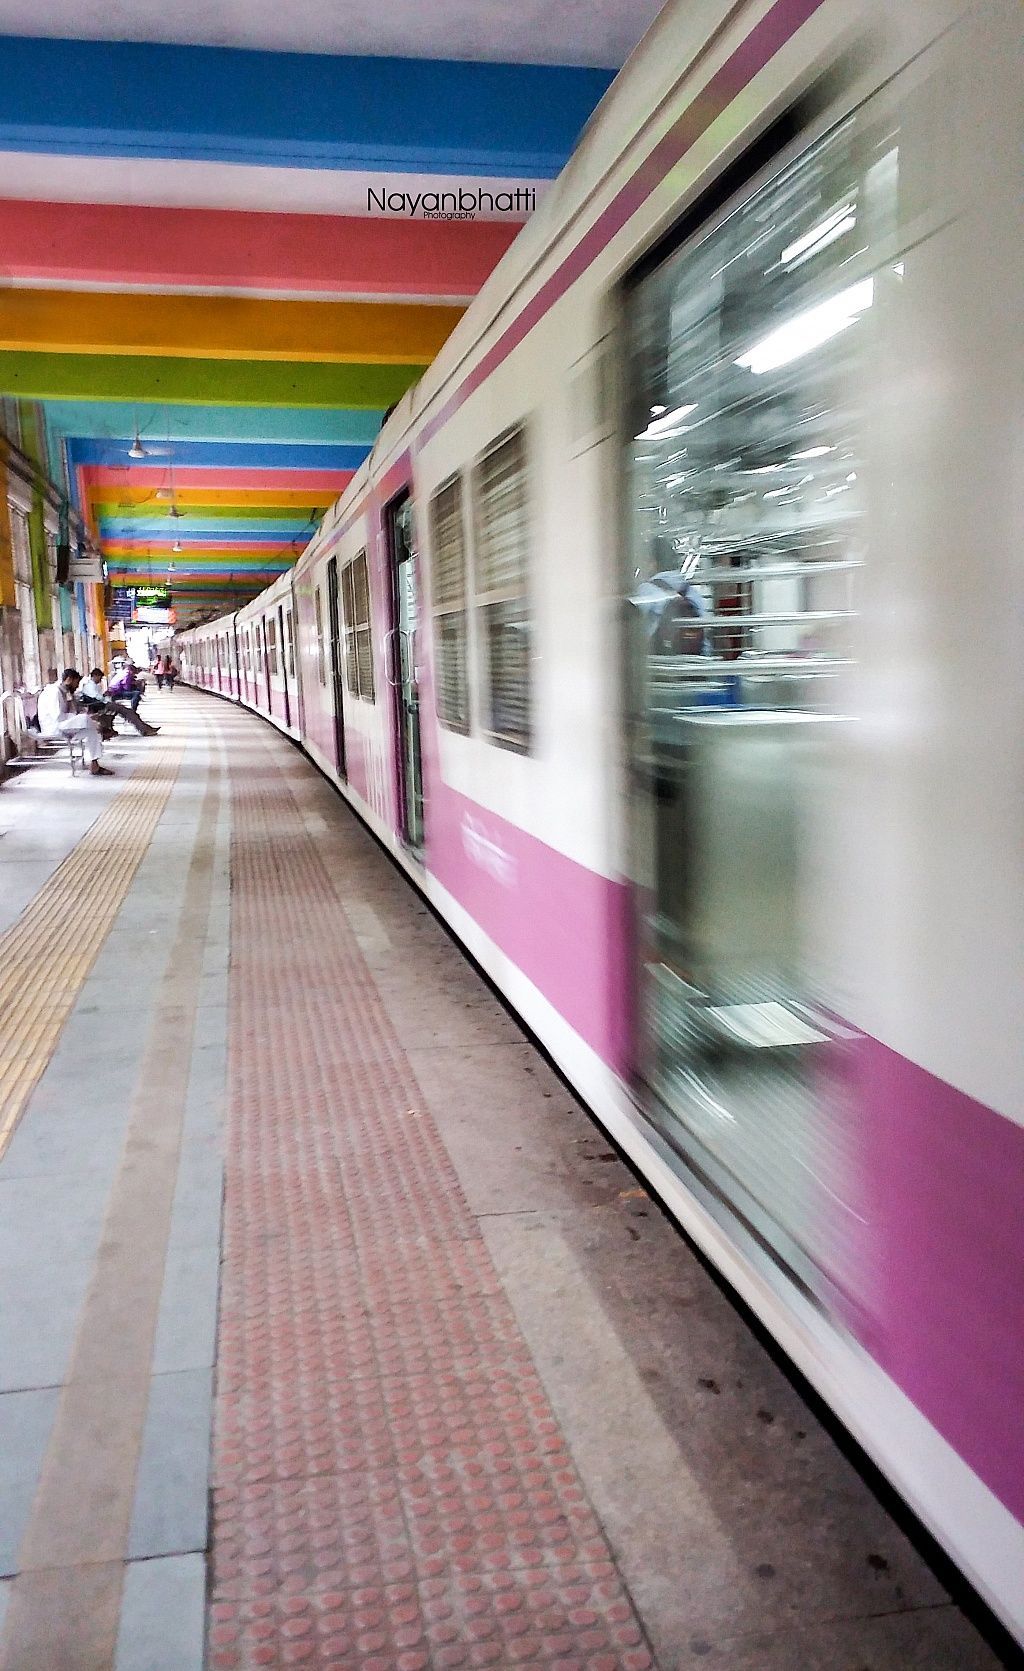 Mumbai Local Train ideas. mumbai, train, world best photo